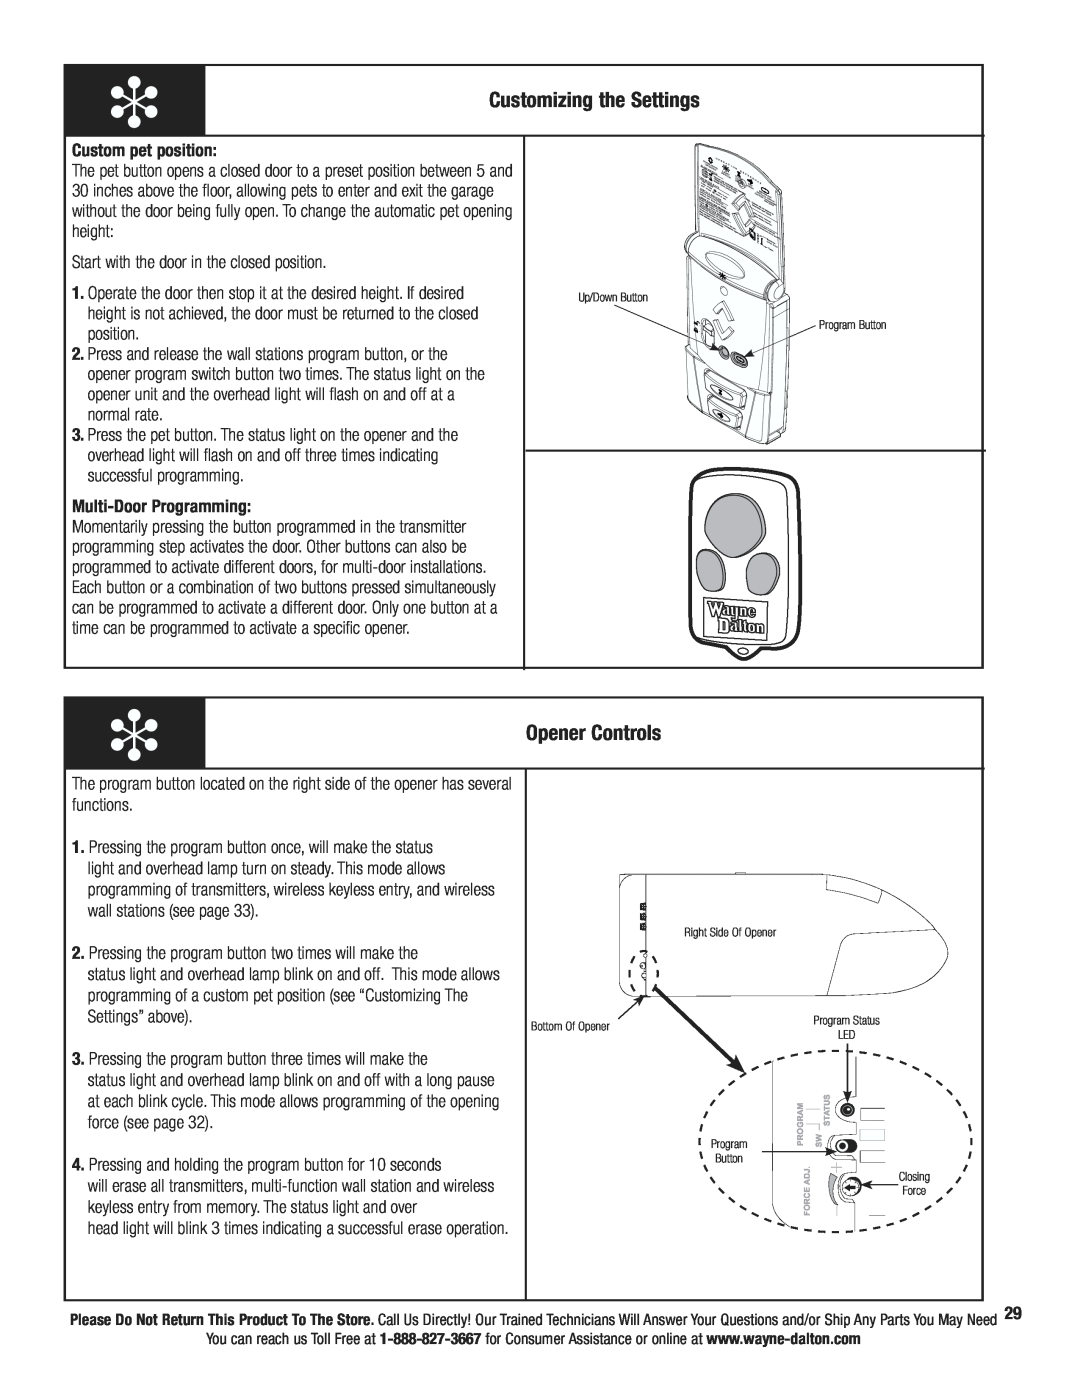 Wayne-Dalton Wireless Wall Station manual Customizing the Settings, Opener Controls 